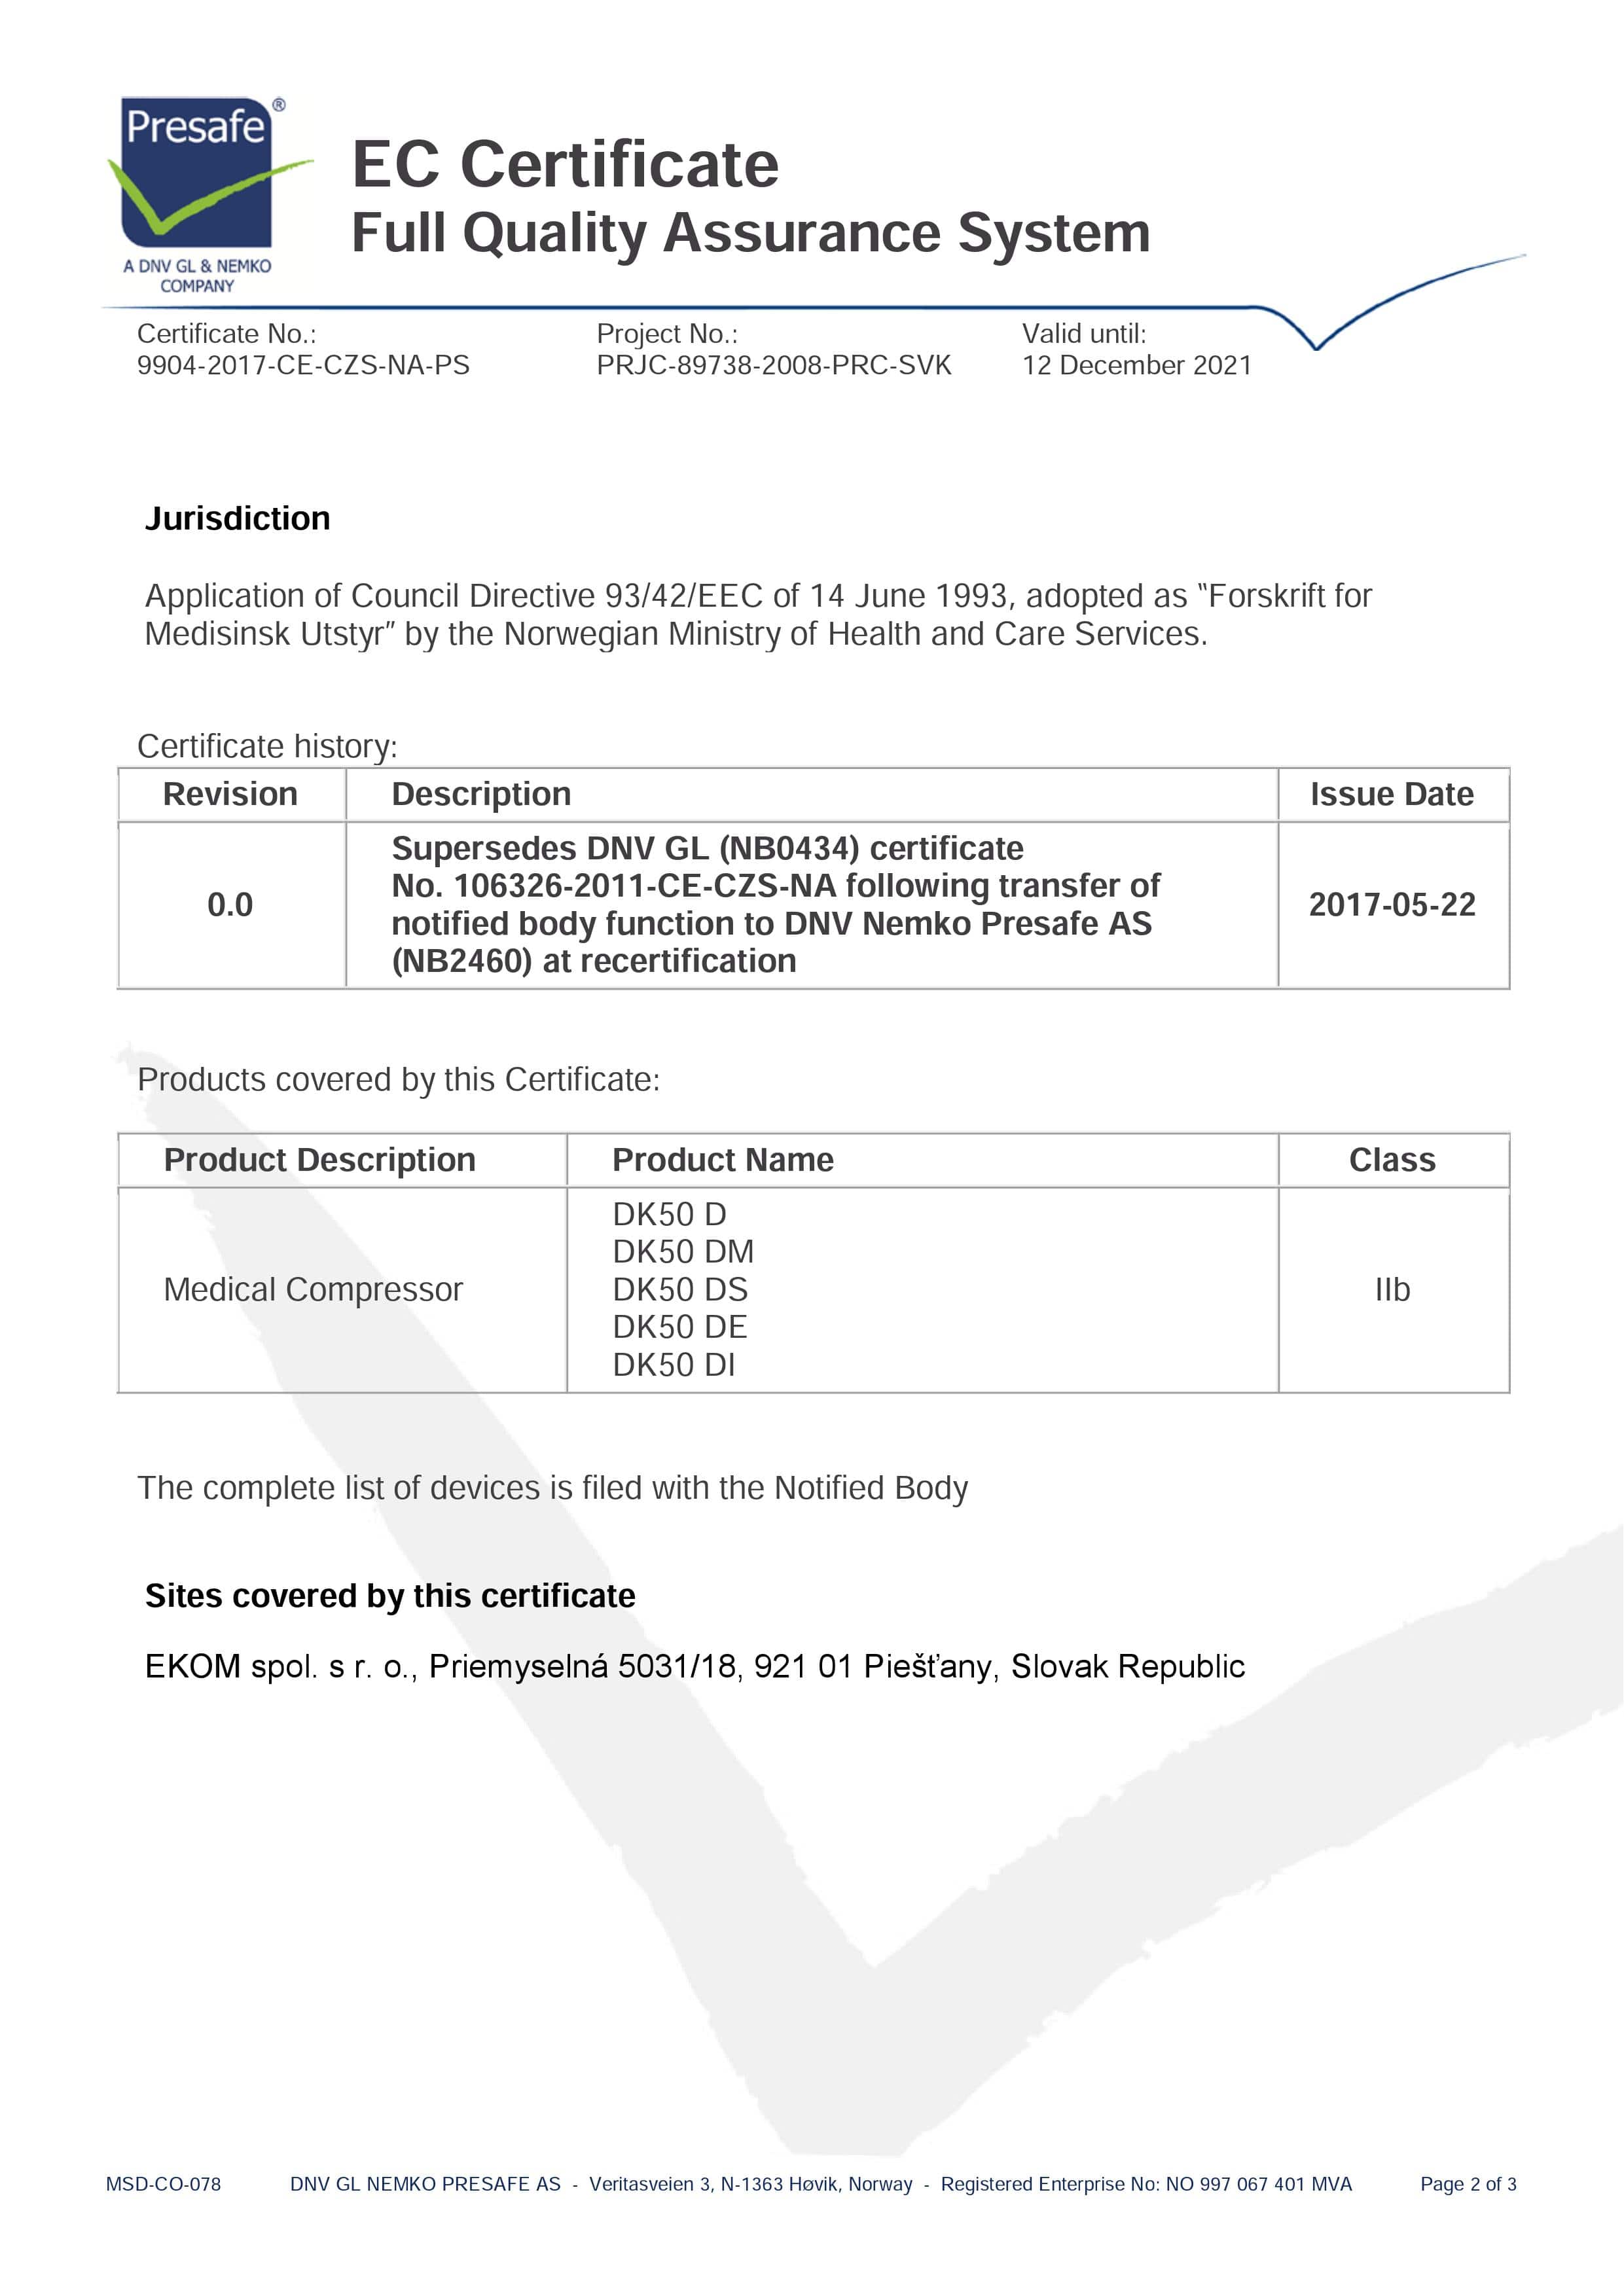 Certyfikat EC EKOM kompresory DK50